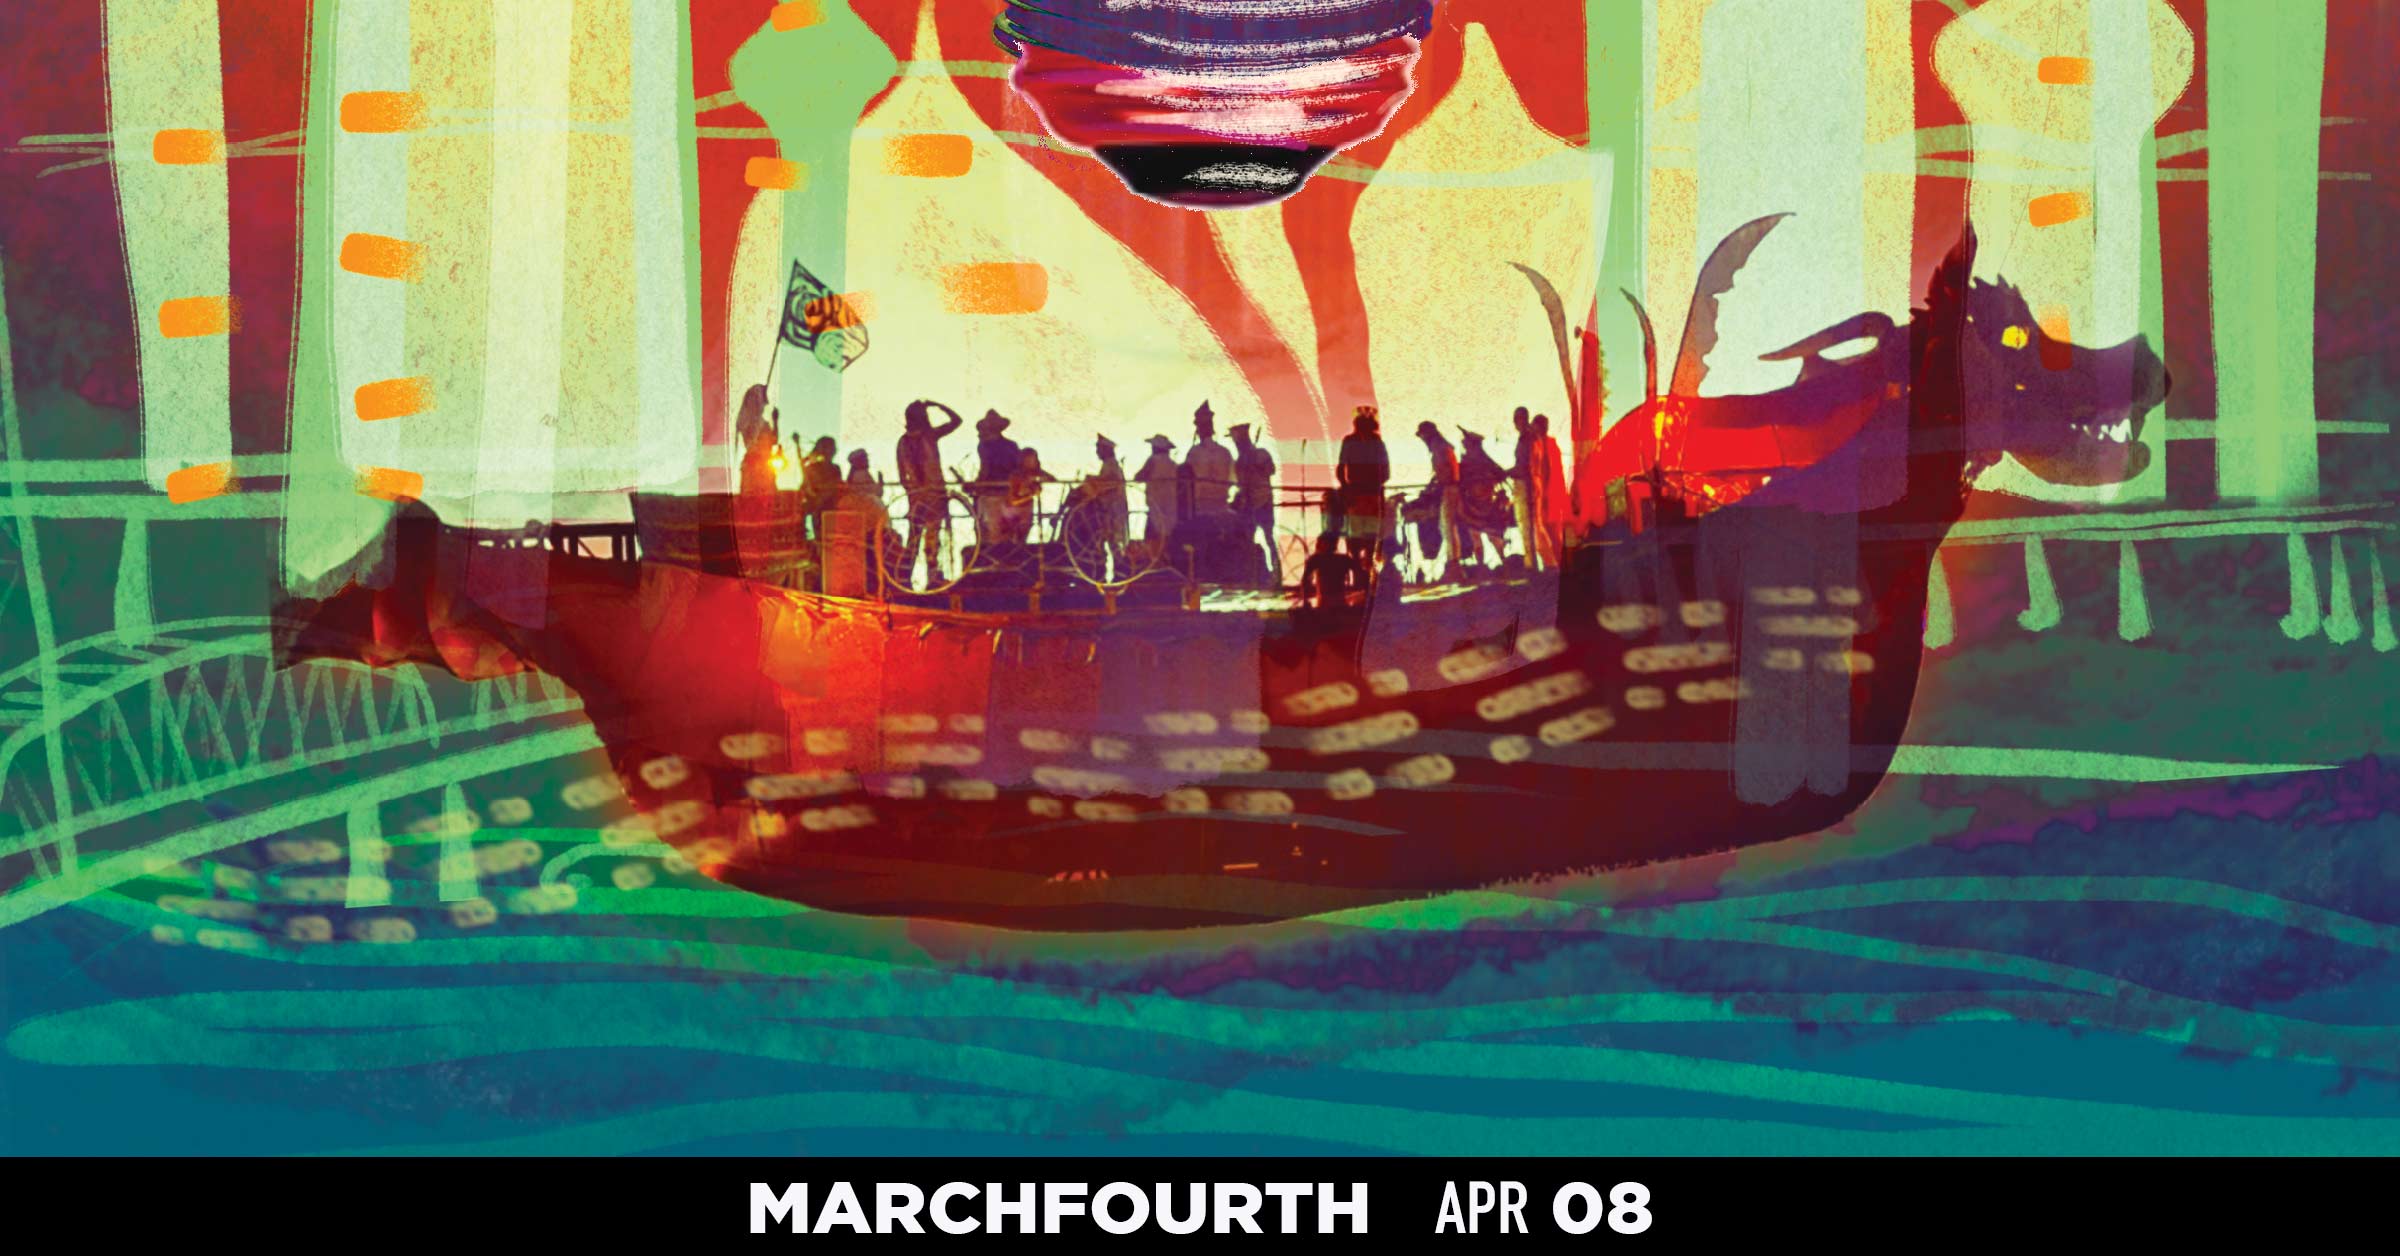 MarchFourth - Apr 08